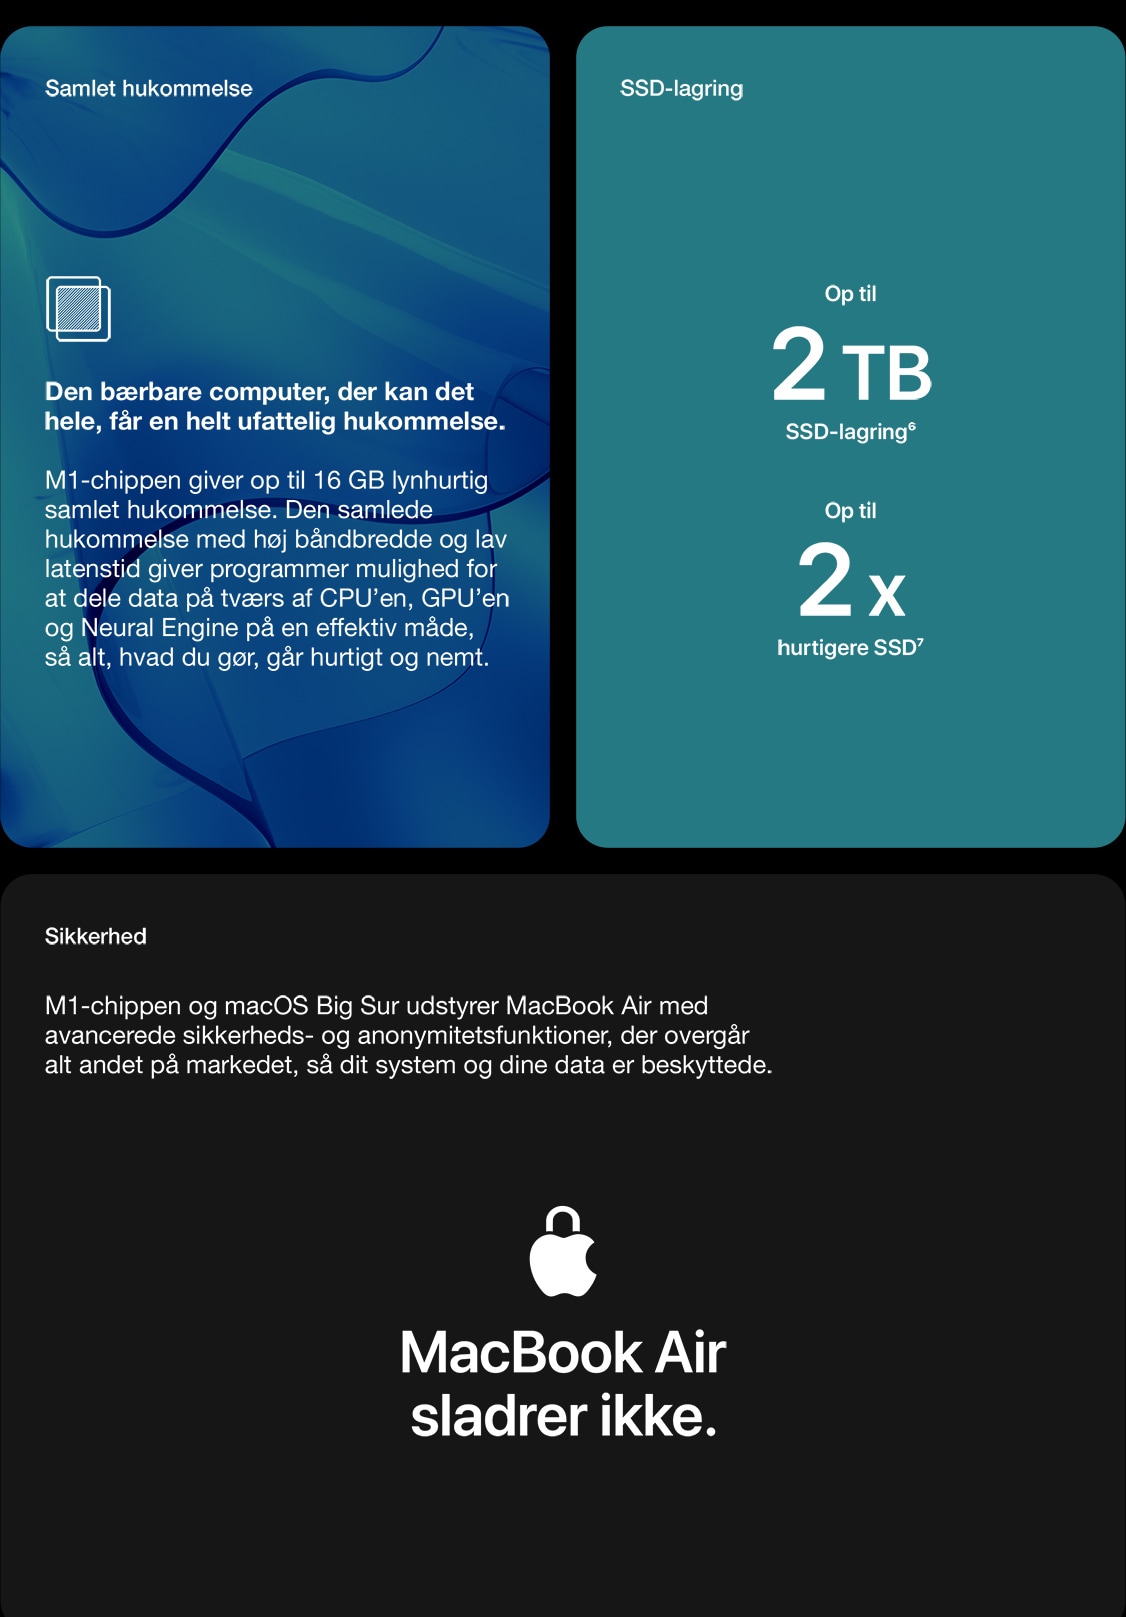 MacBook Air med Apple M1-chippen